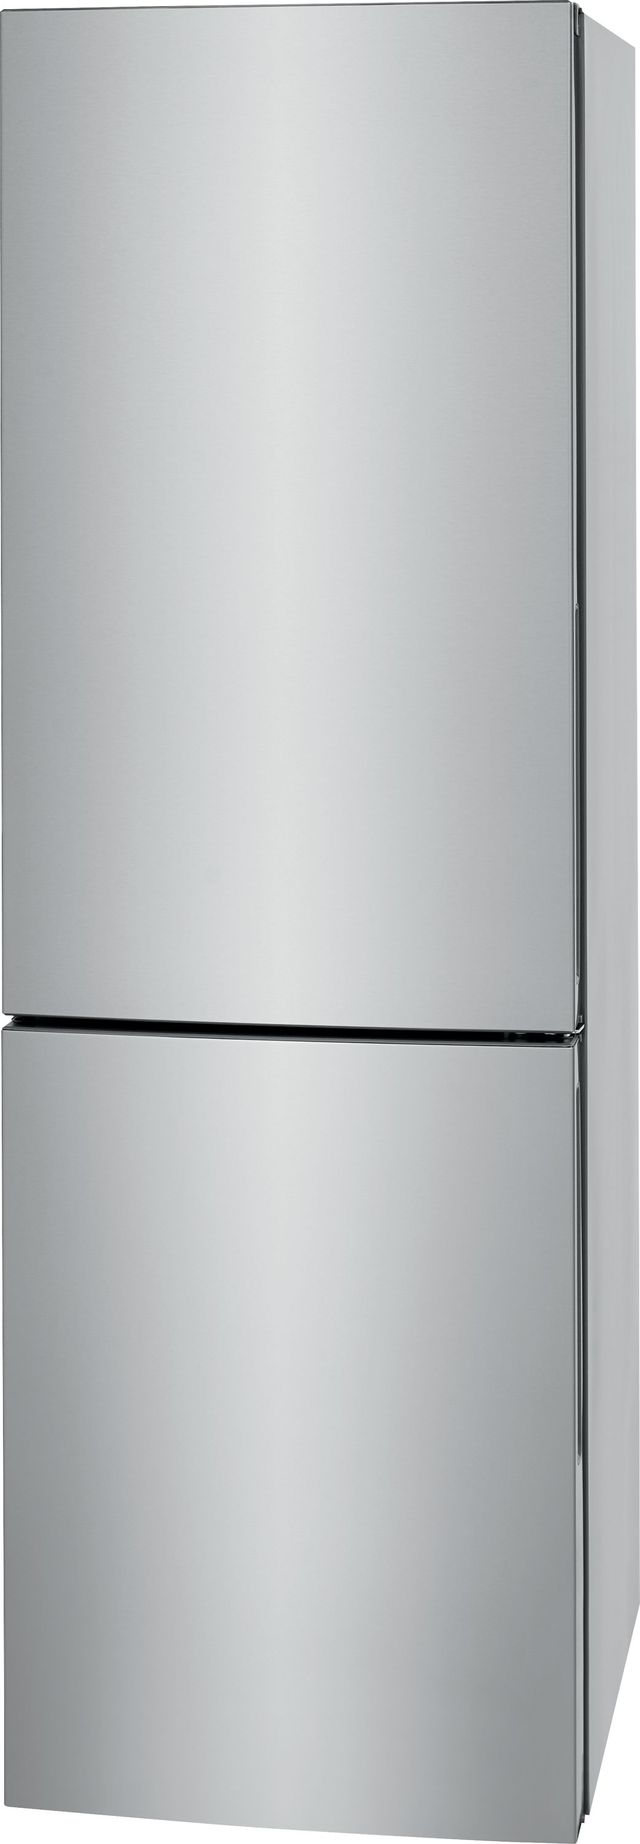 Electrolux Kitchen 11.8 Cu. Ft. Stainless Steel Bottom Freezer Refrigerator 3